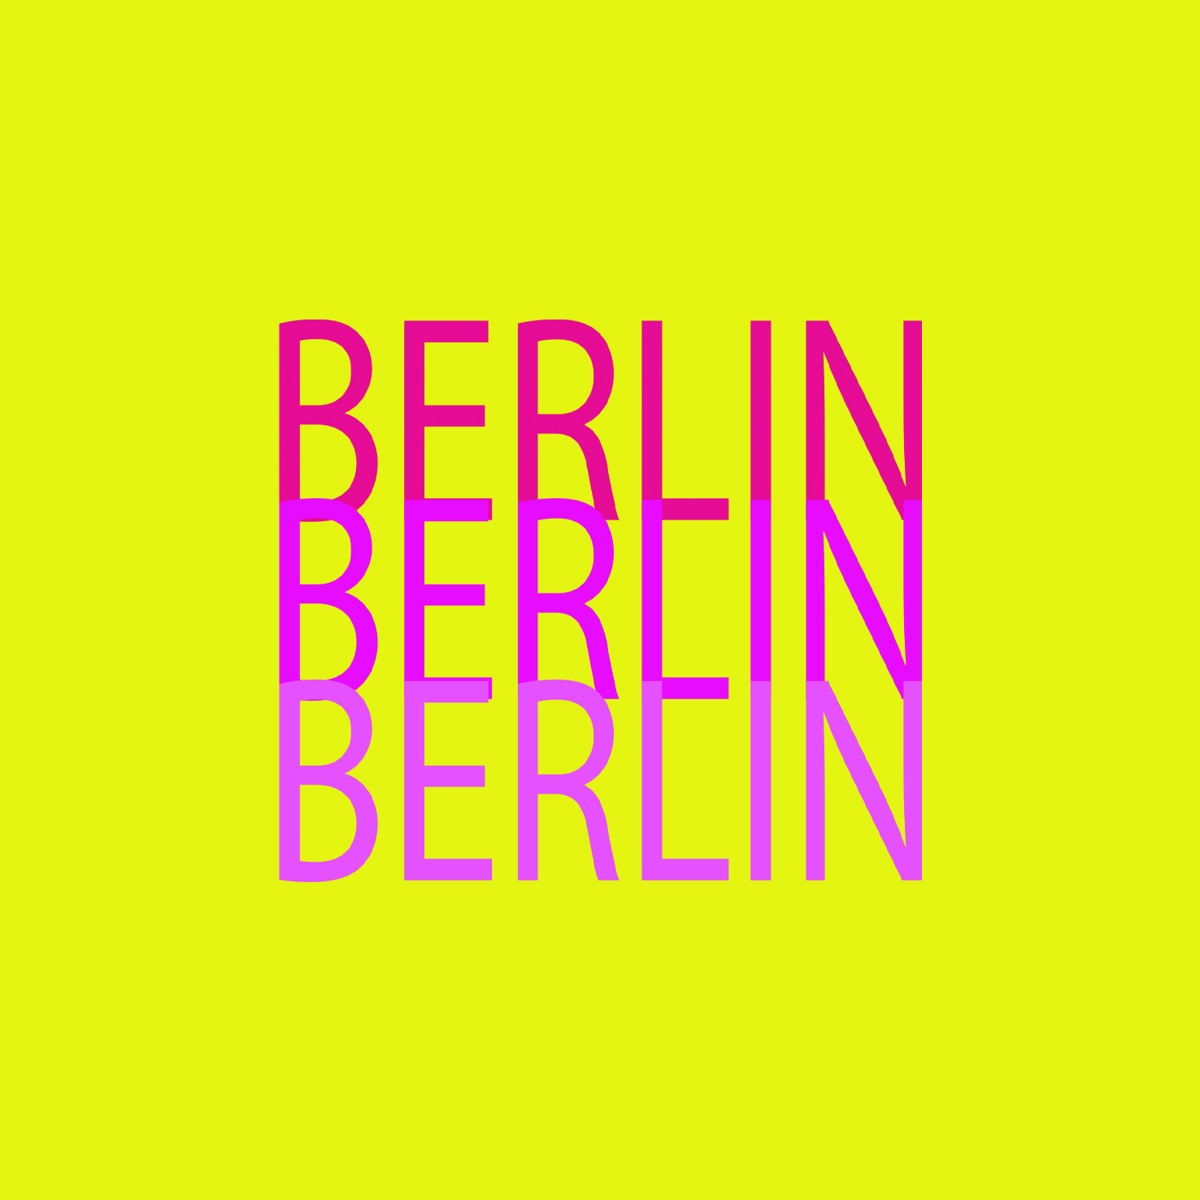 Happy Place Berlin Napkin 25x25